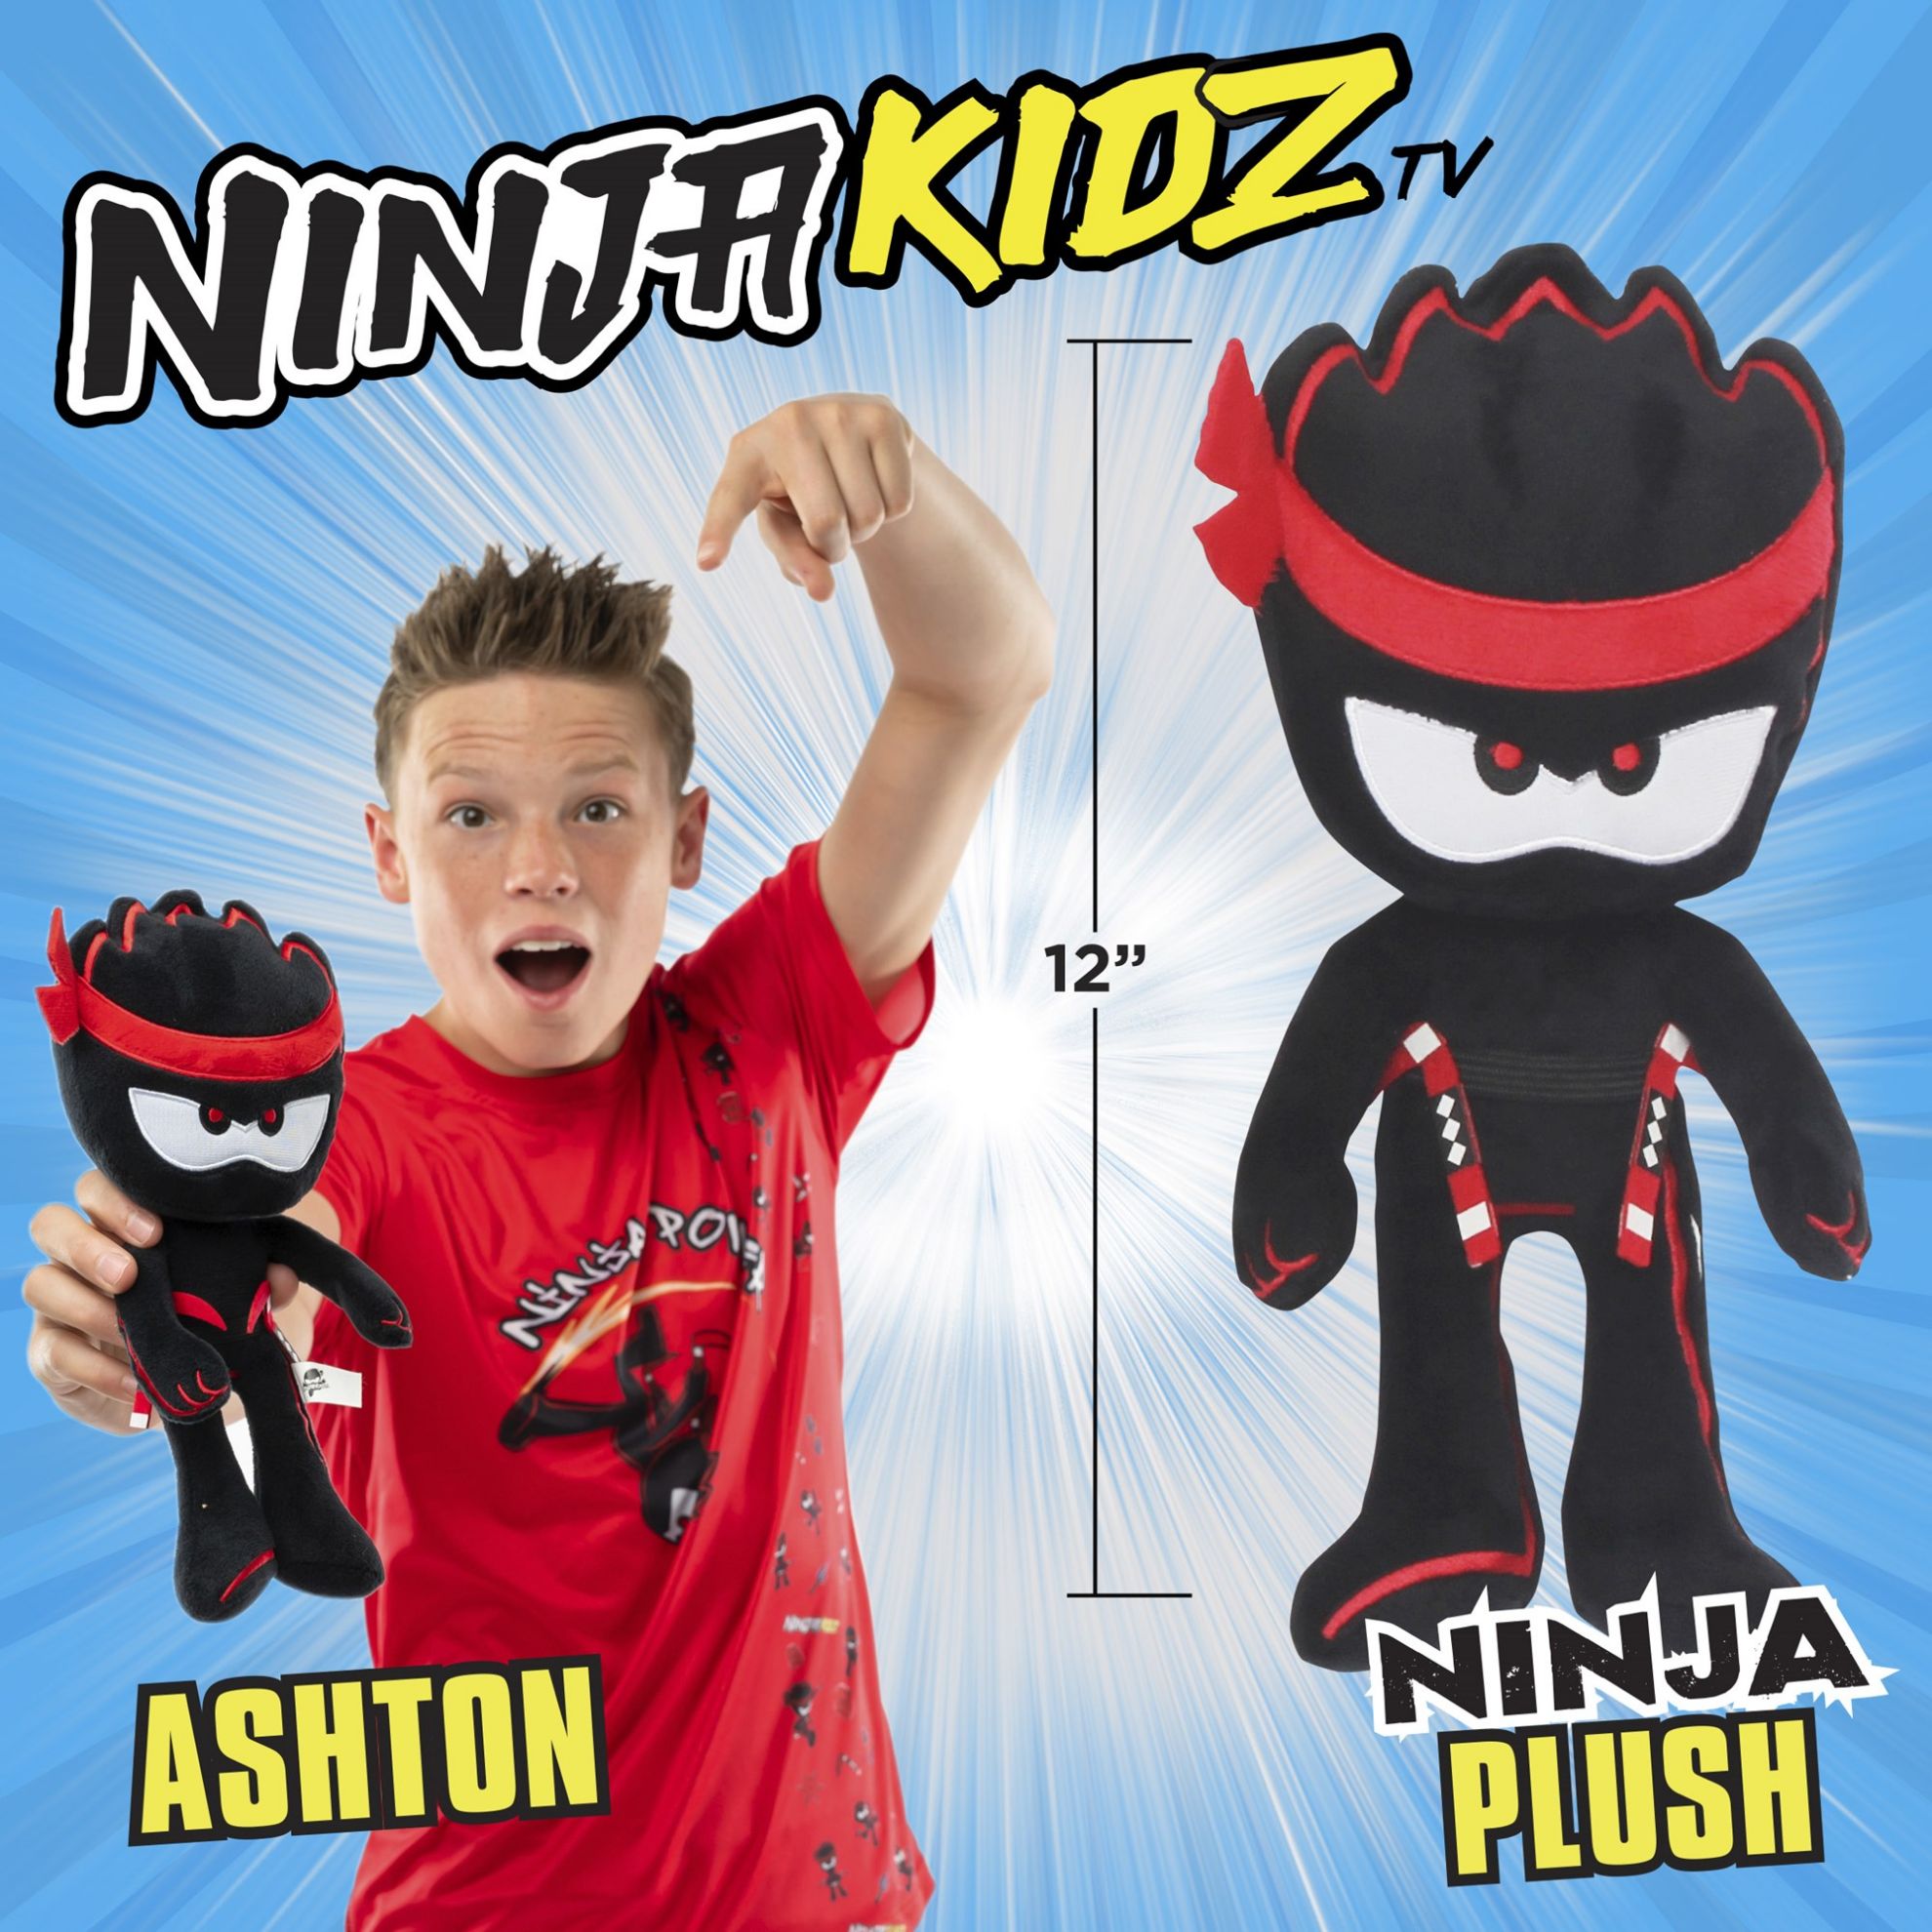 Ninja Kidz Plush - Ashton